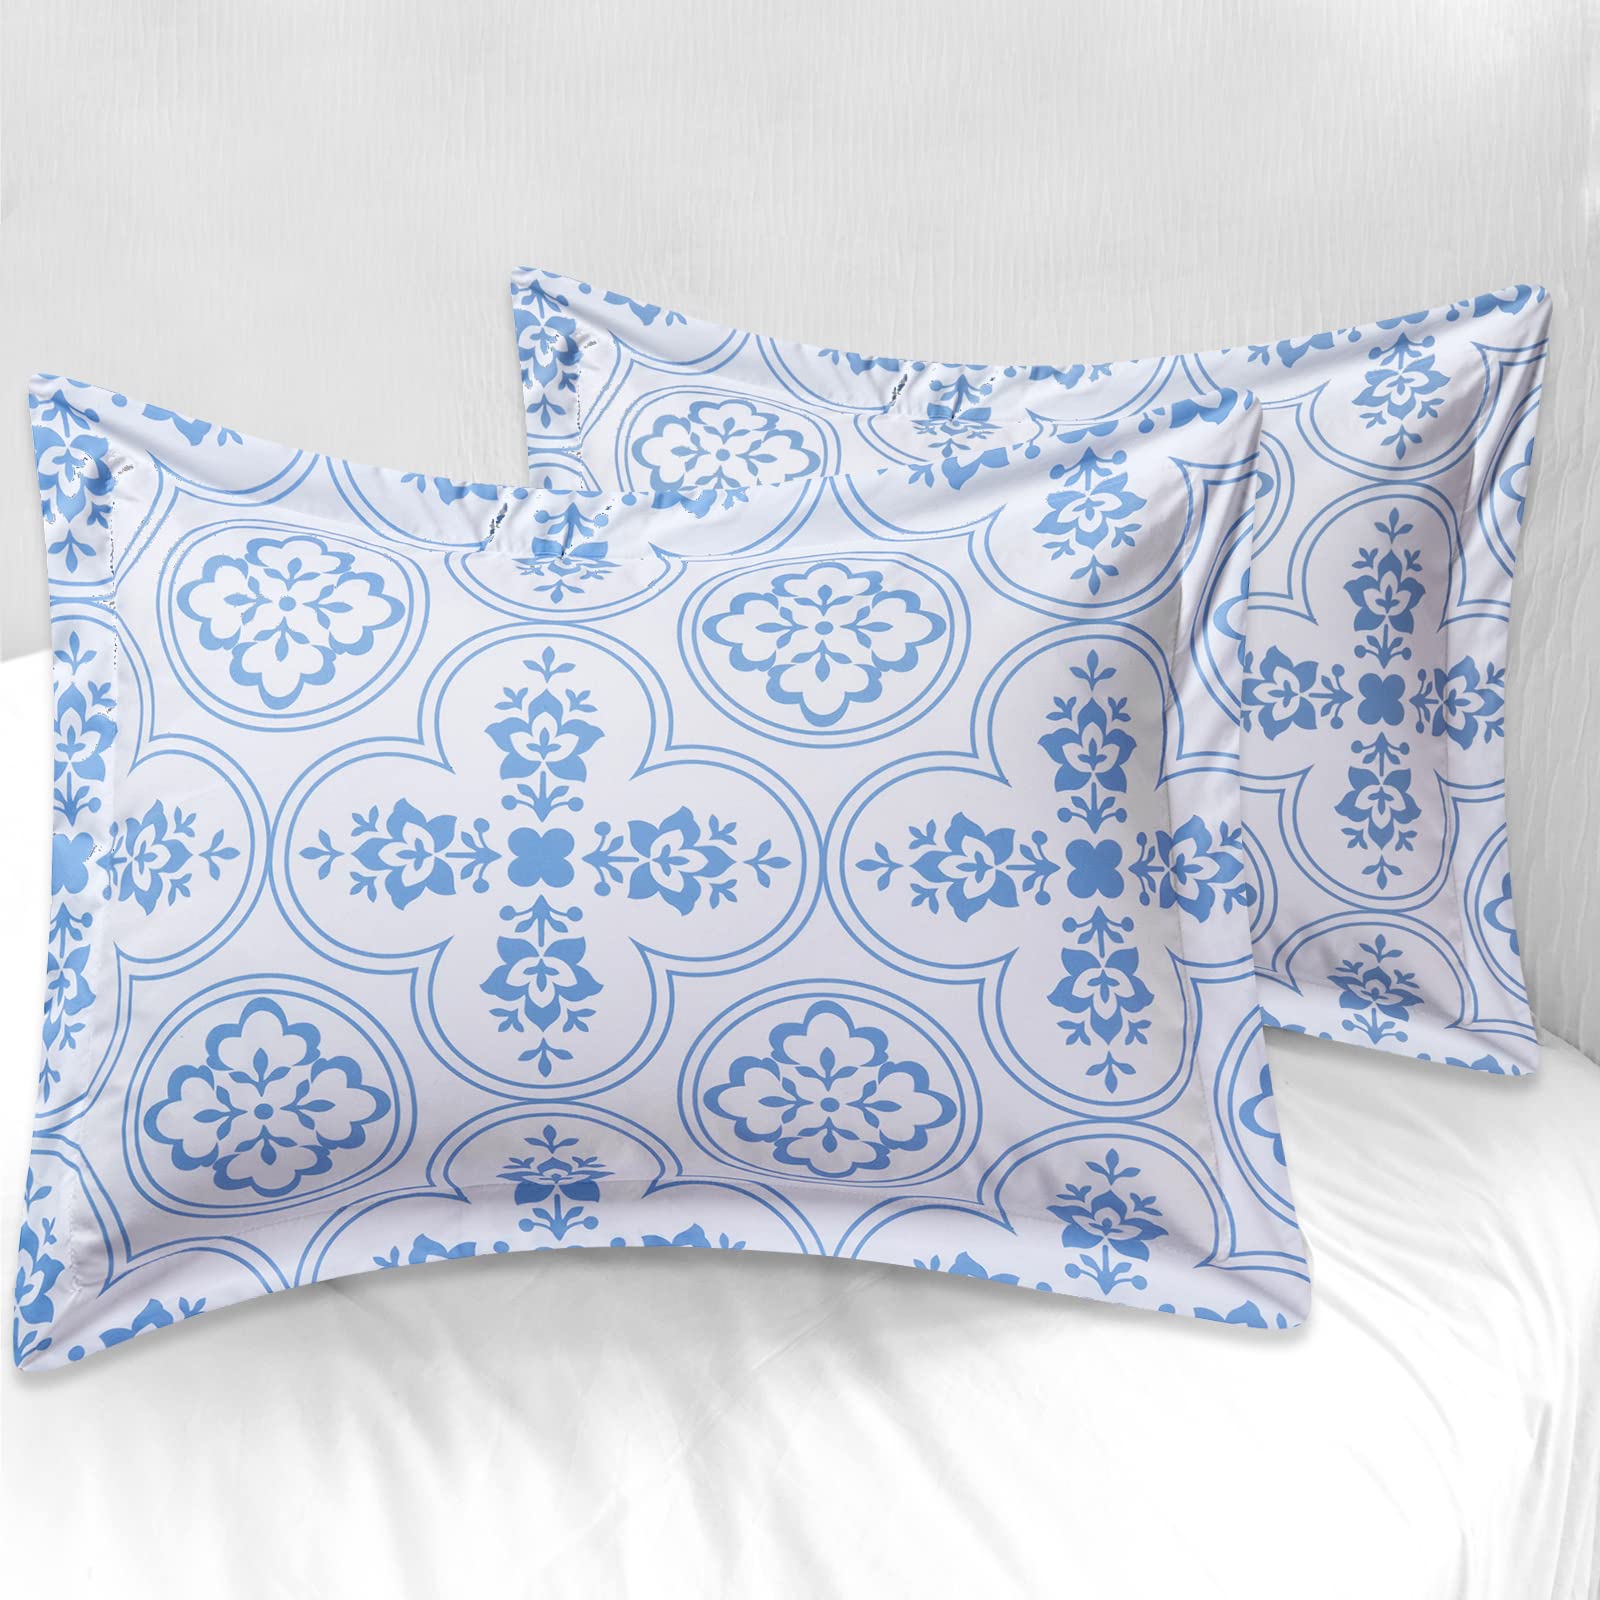 Blue Floral 4 Pcs Comforter Set Includes 1 Comforter, 2